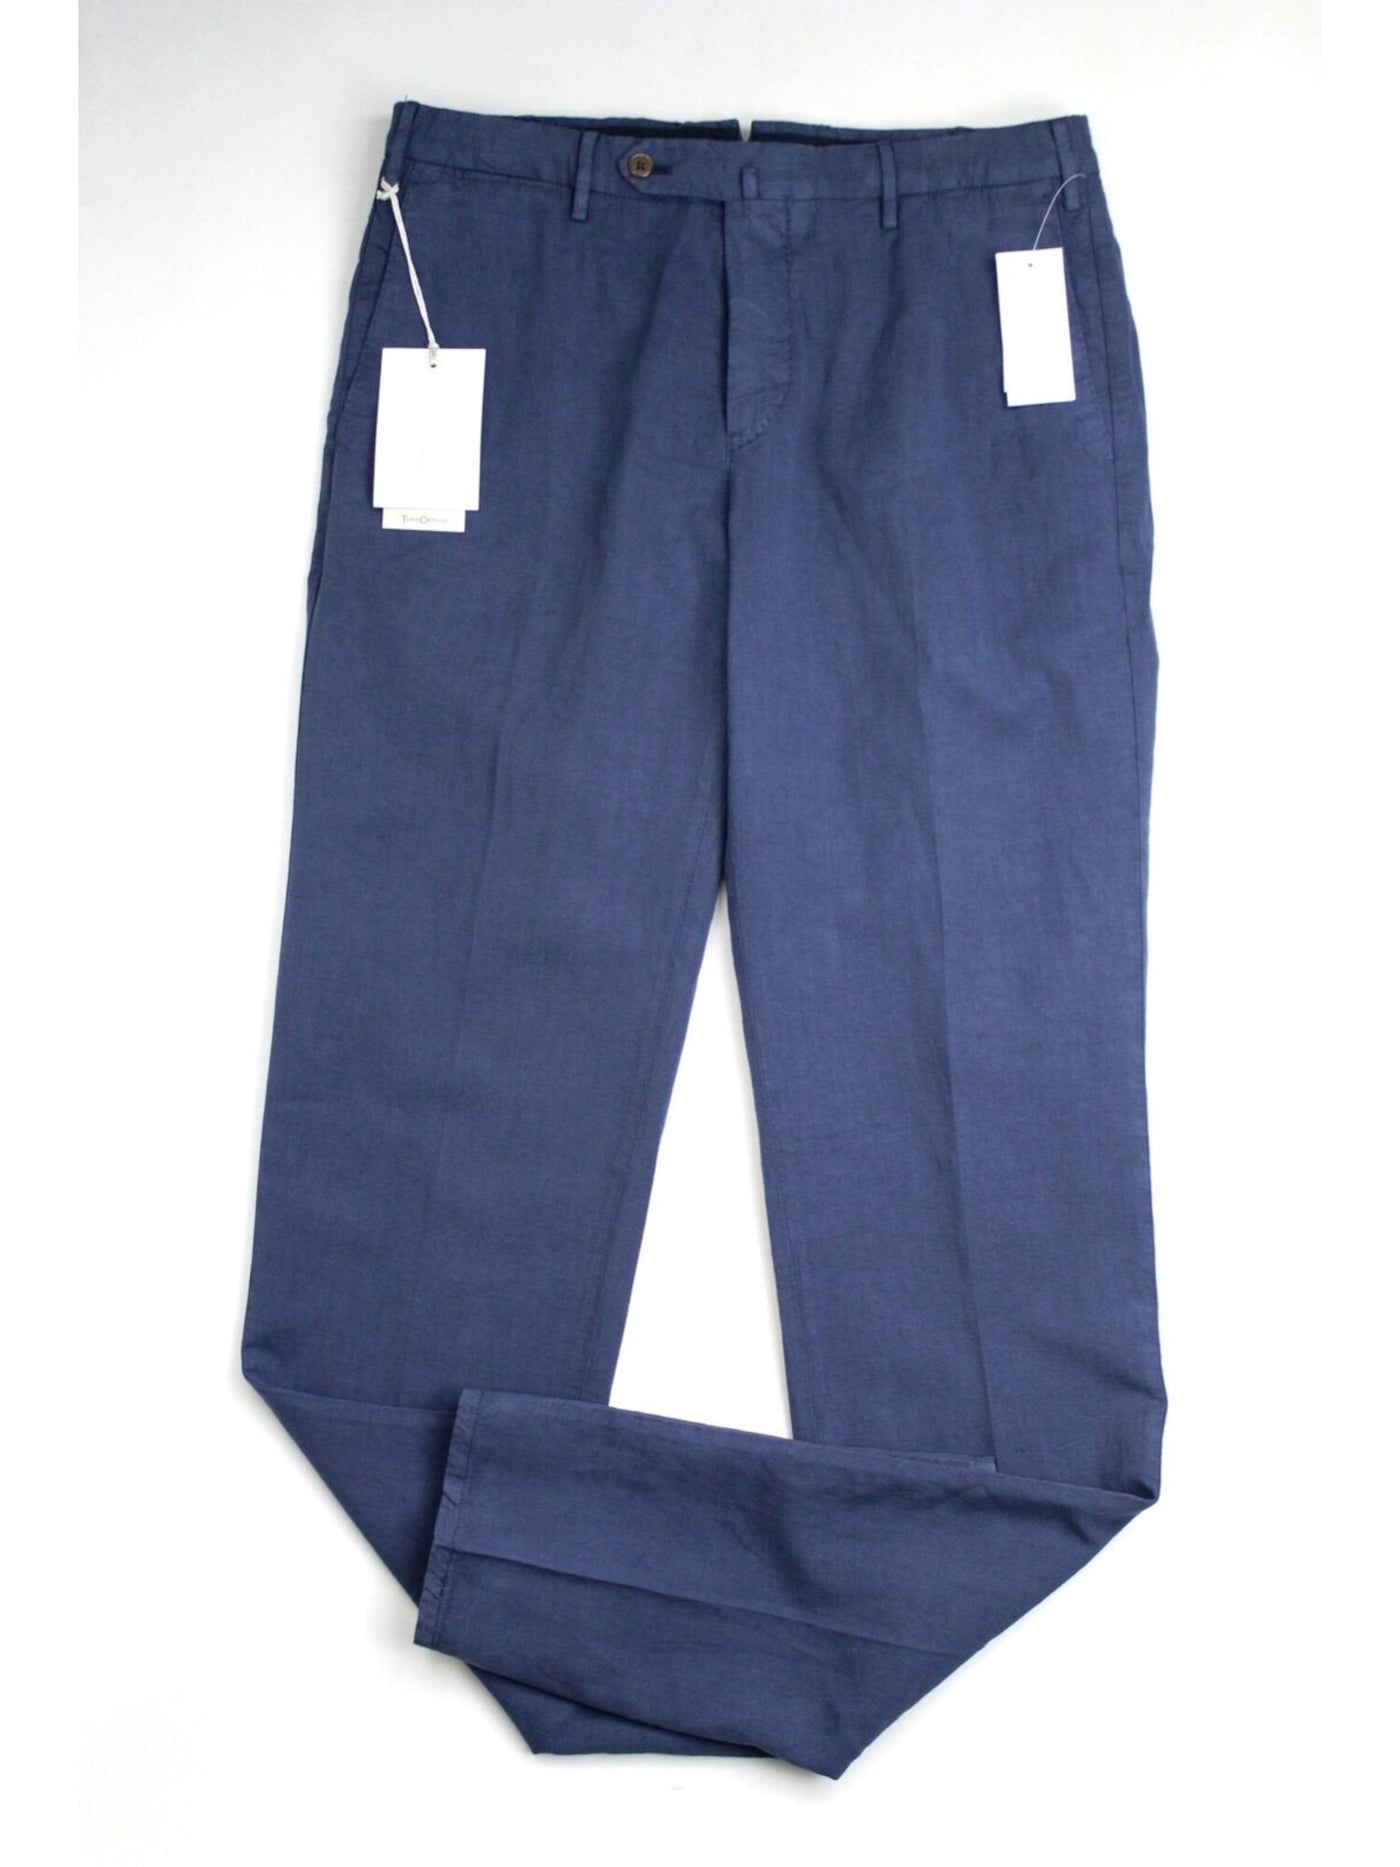 TORIN OPIFICIO Mens Blue Flat Front, Jeans 56